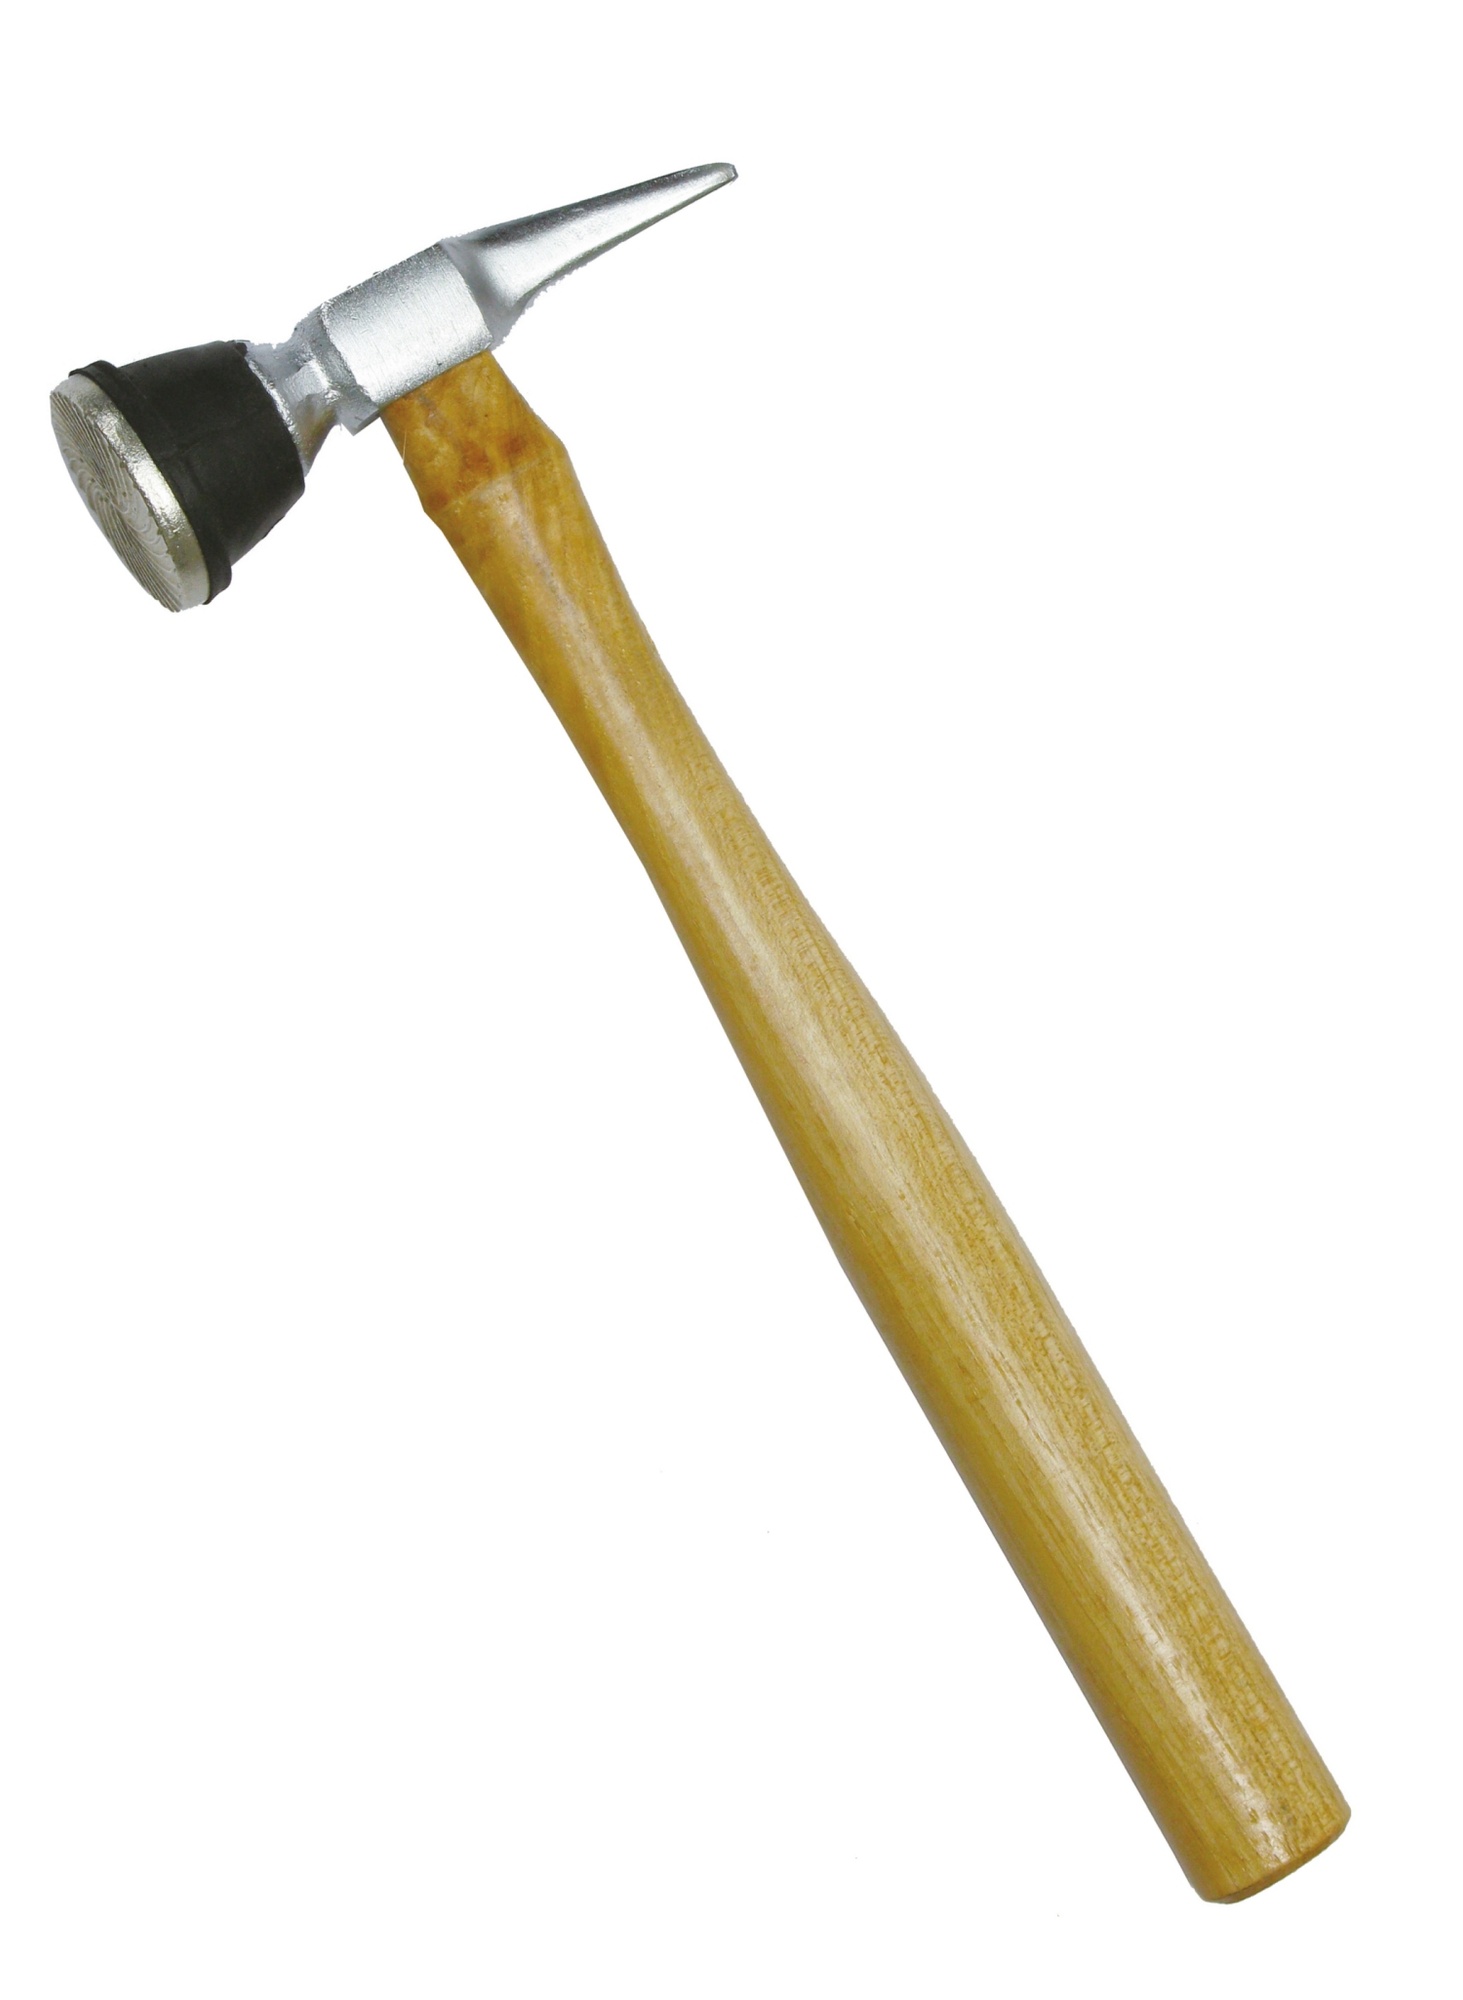 38mm Riffelhammer Kopfgewicht Onlinehandel BGS 1675 Hickorystiel | 225g Ø Ausbeulhammer Fluid